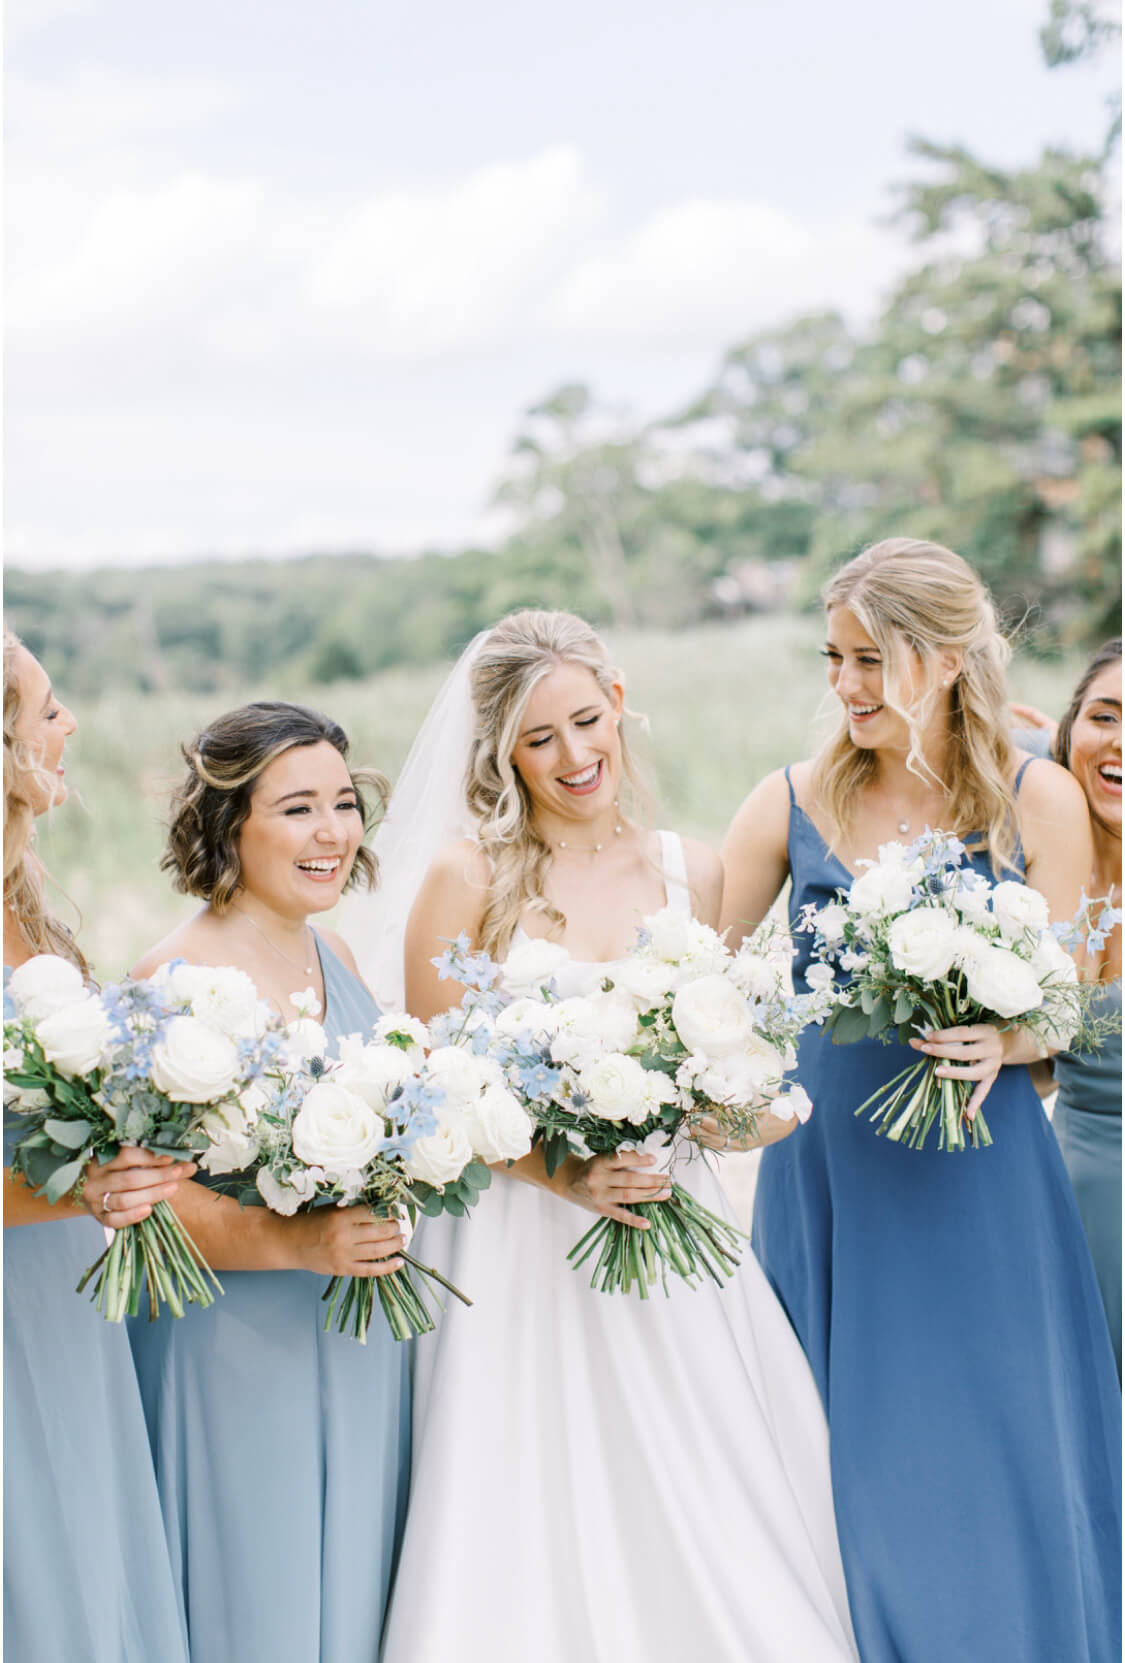 Summer garden style bride & bridesmaids wedding bouquets with white & light blue.